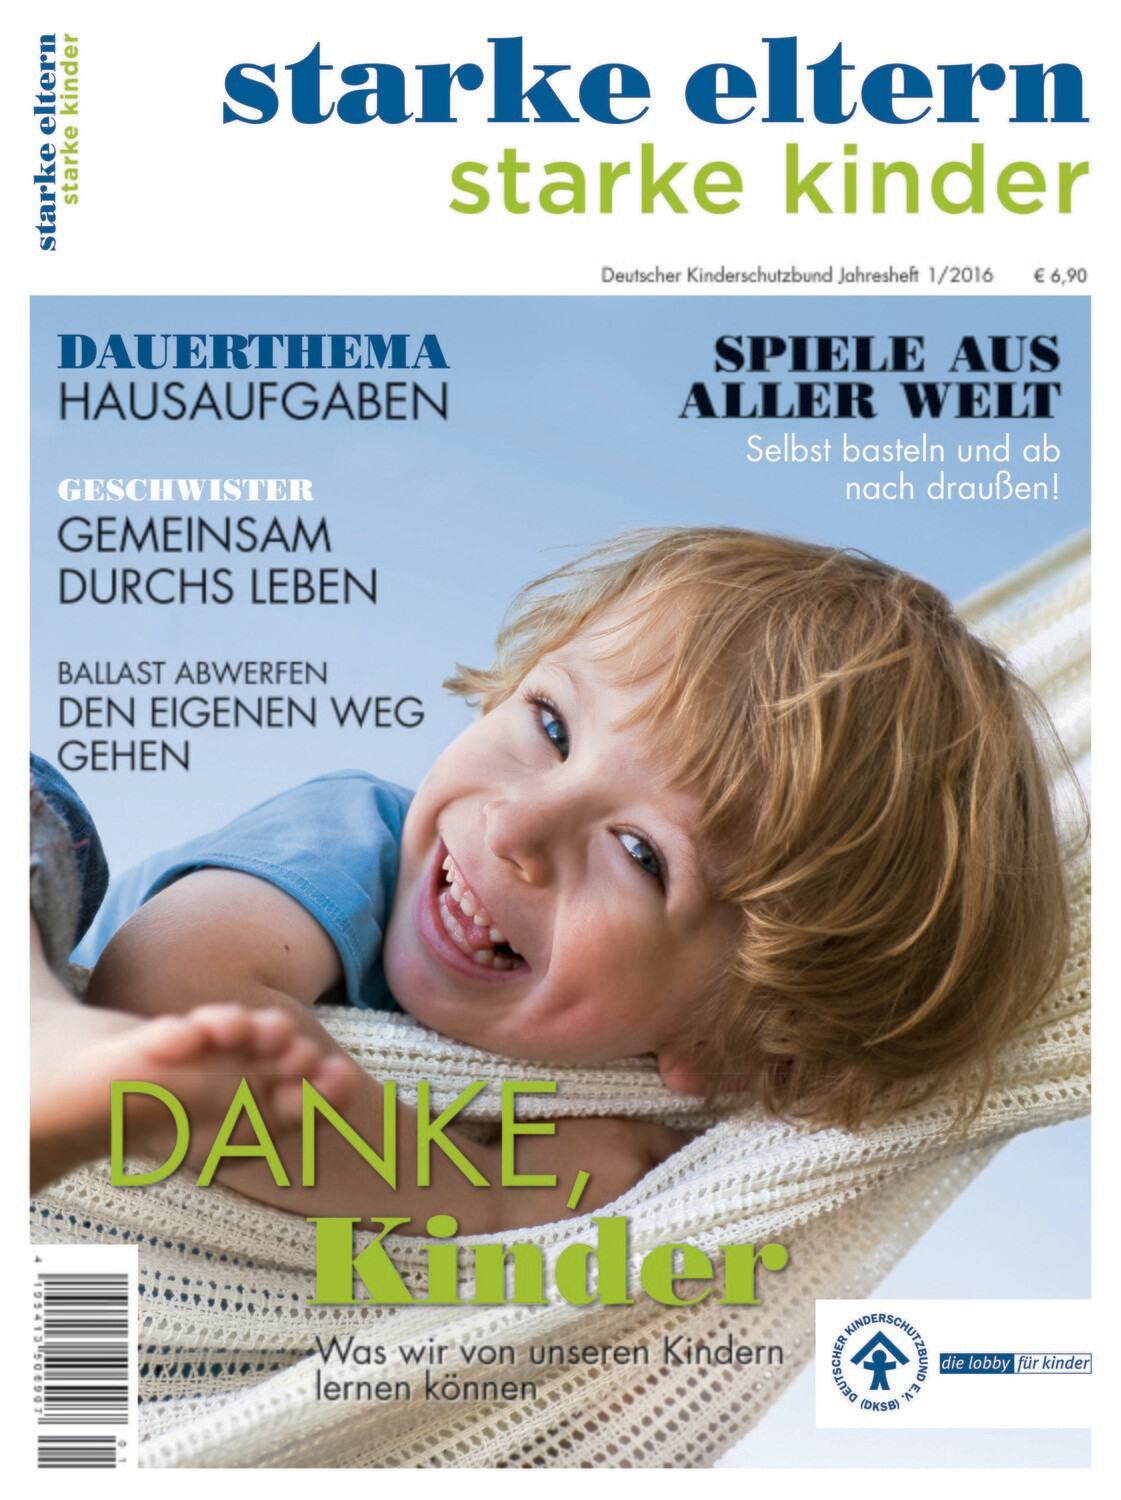 starke eltern - starke kinder 2016 (e-paper)